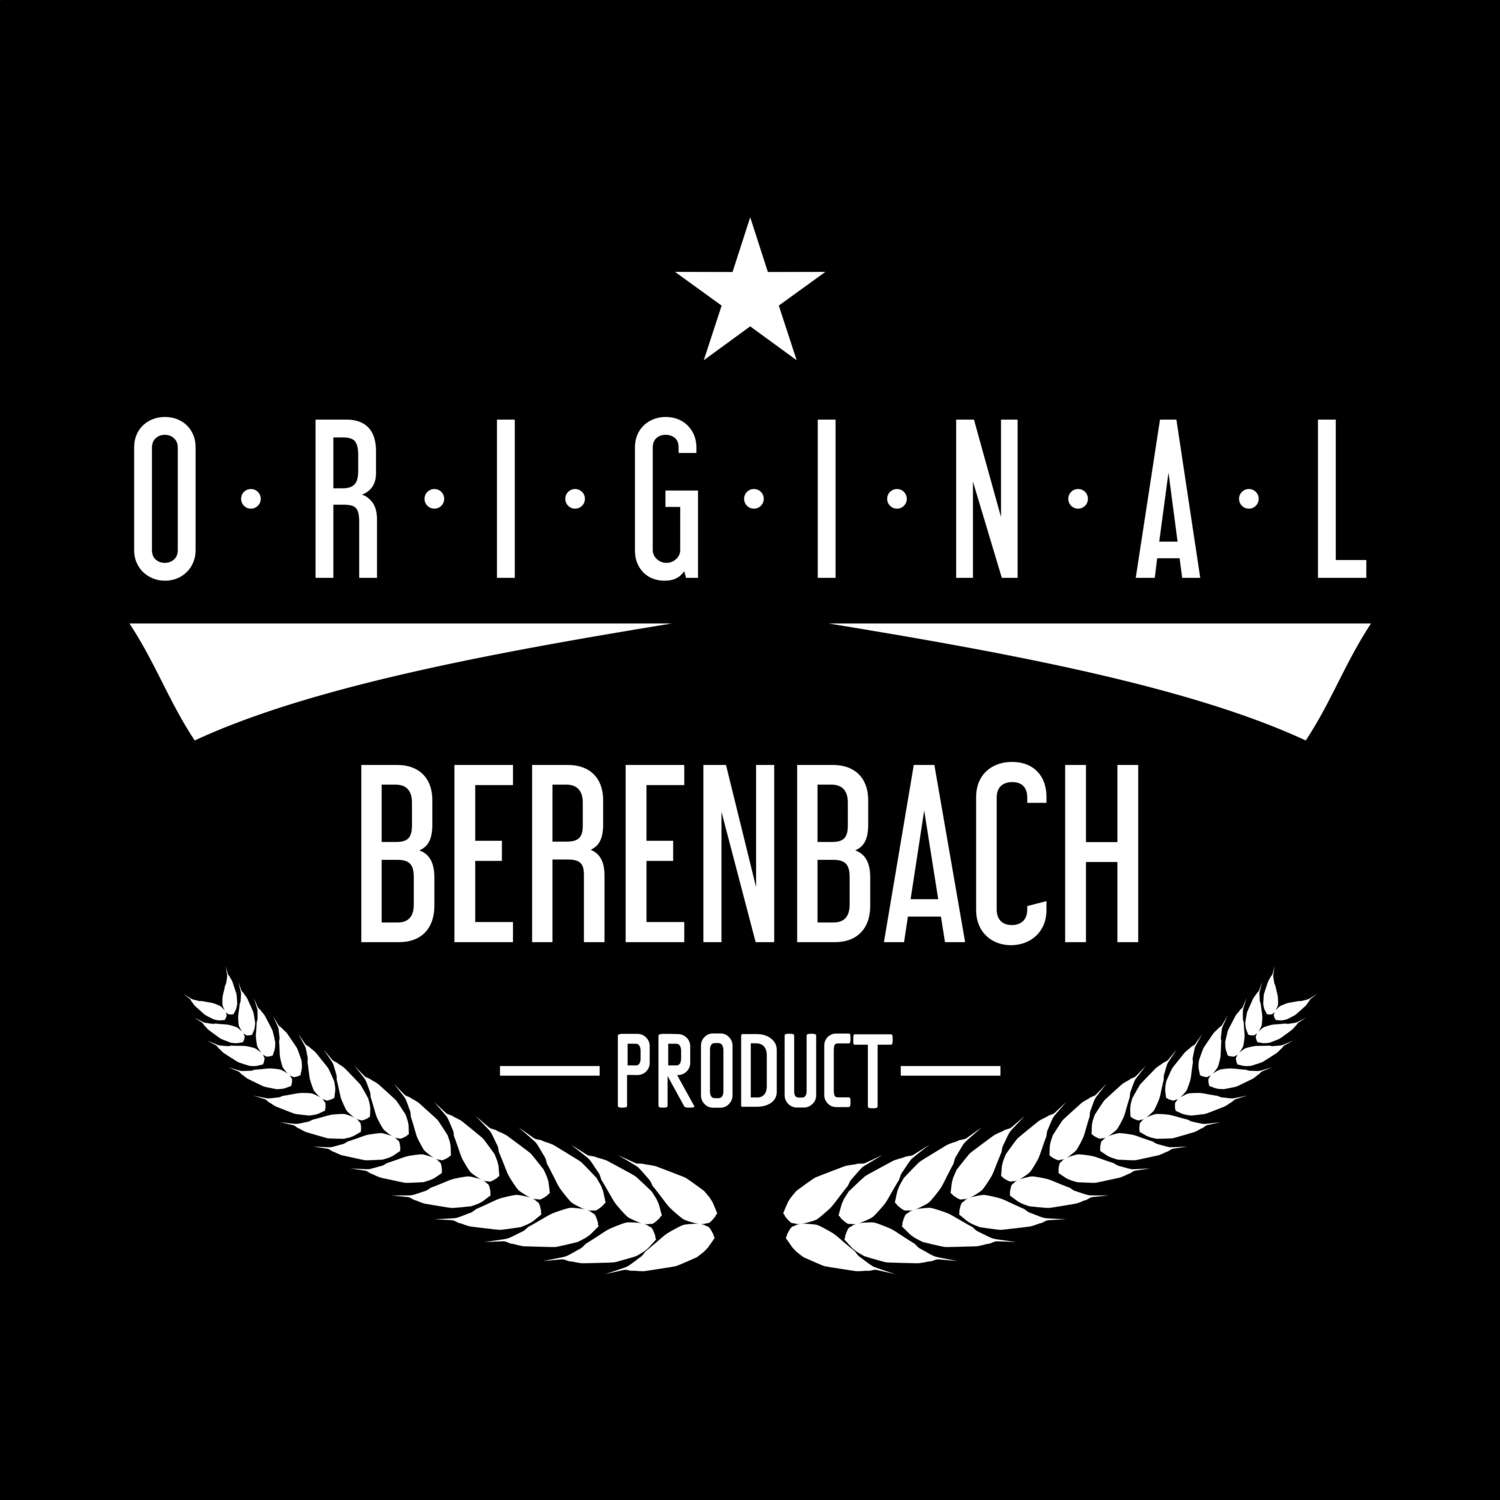 Berenbach T-Shirt »Original Product«